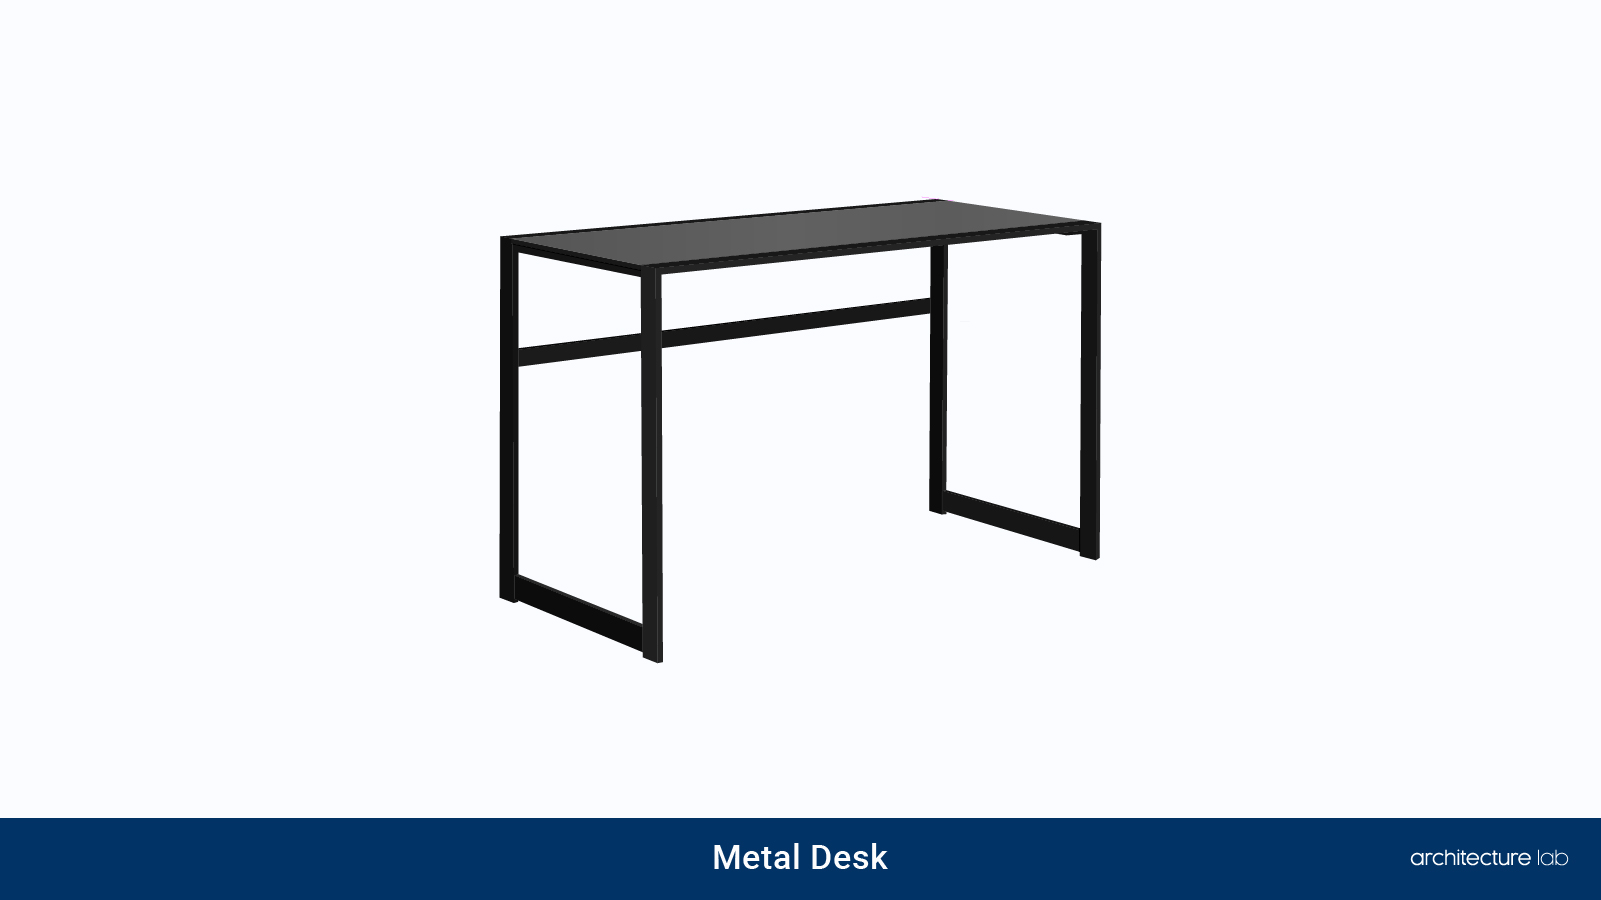 27. Metal desk